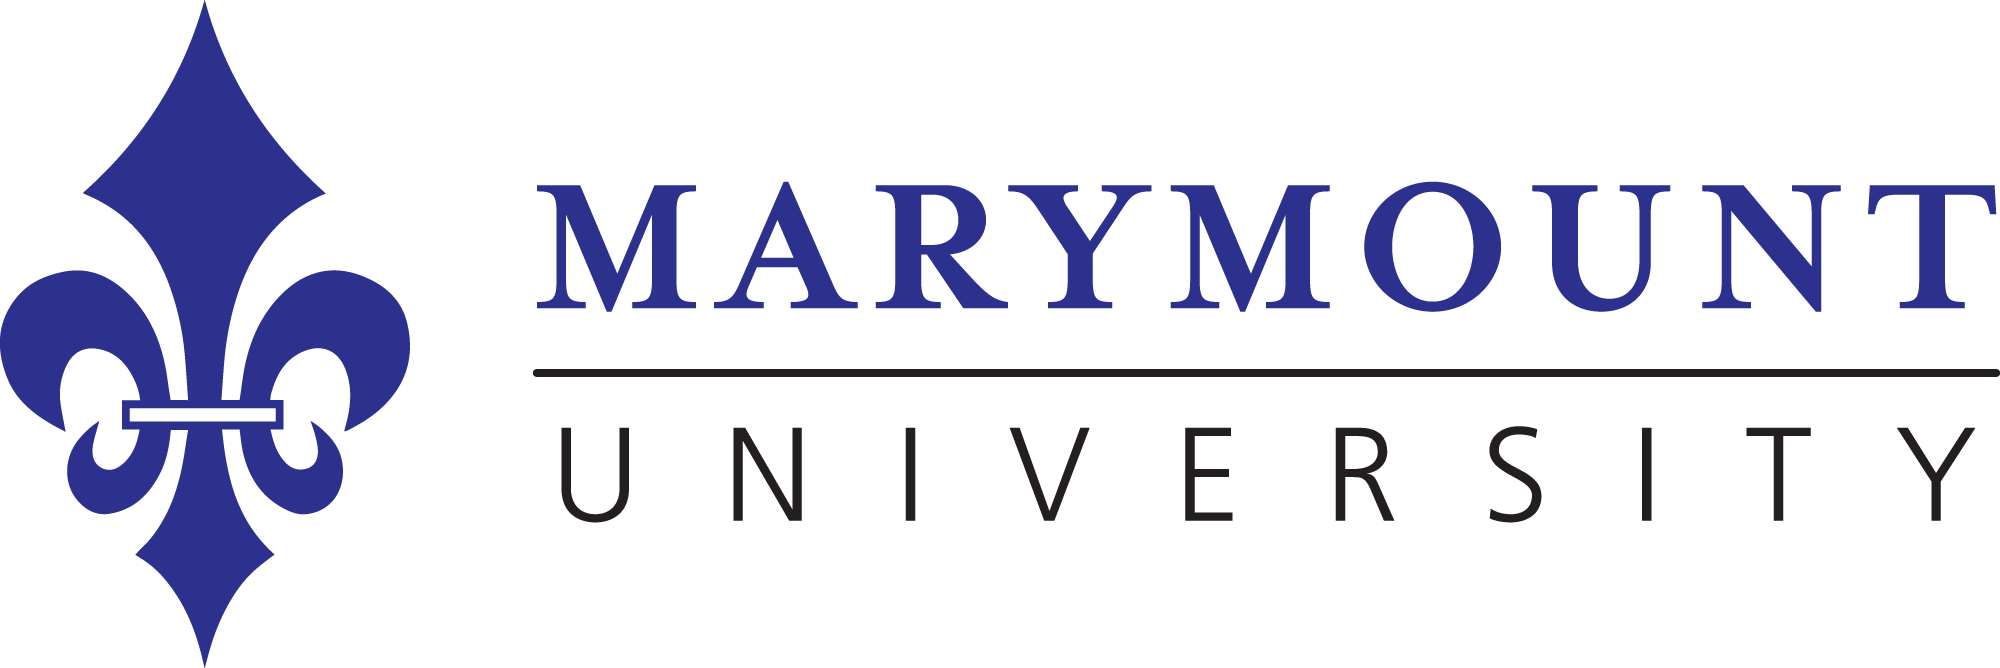 Marymount University-logo-width-2000.png